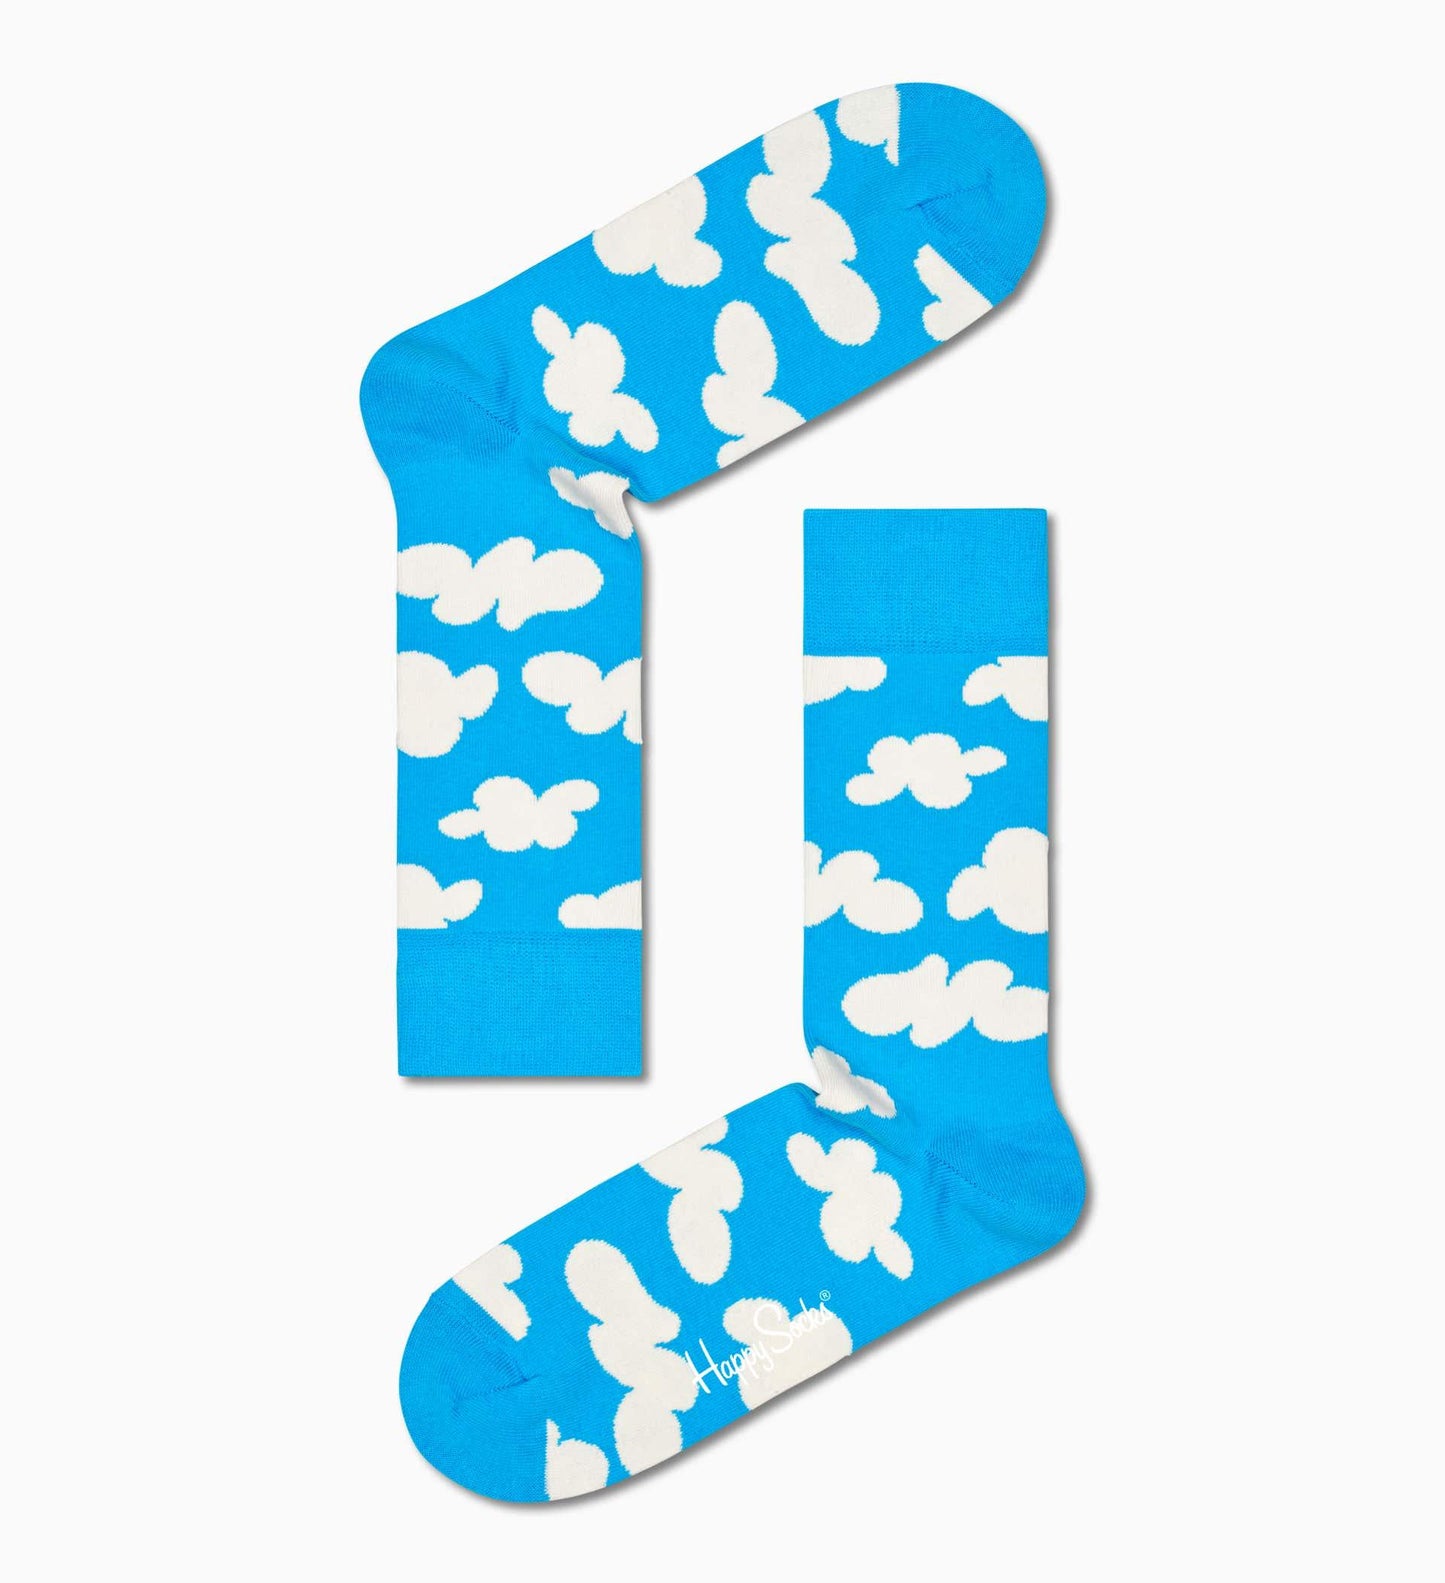 Happy Socks Cloudy Sock - No Generation